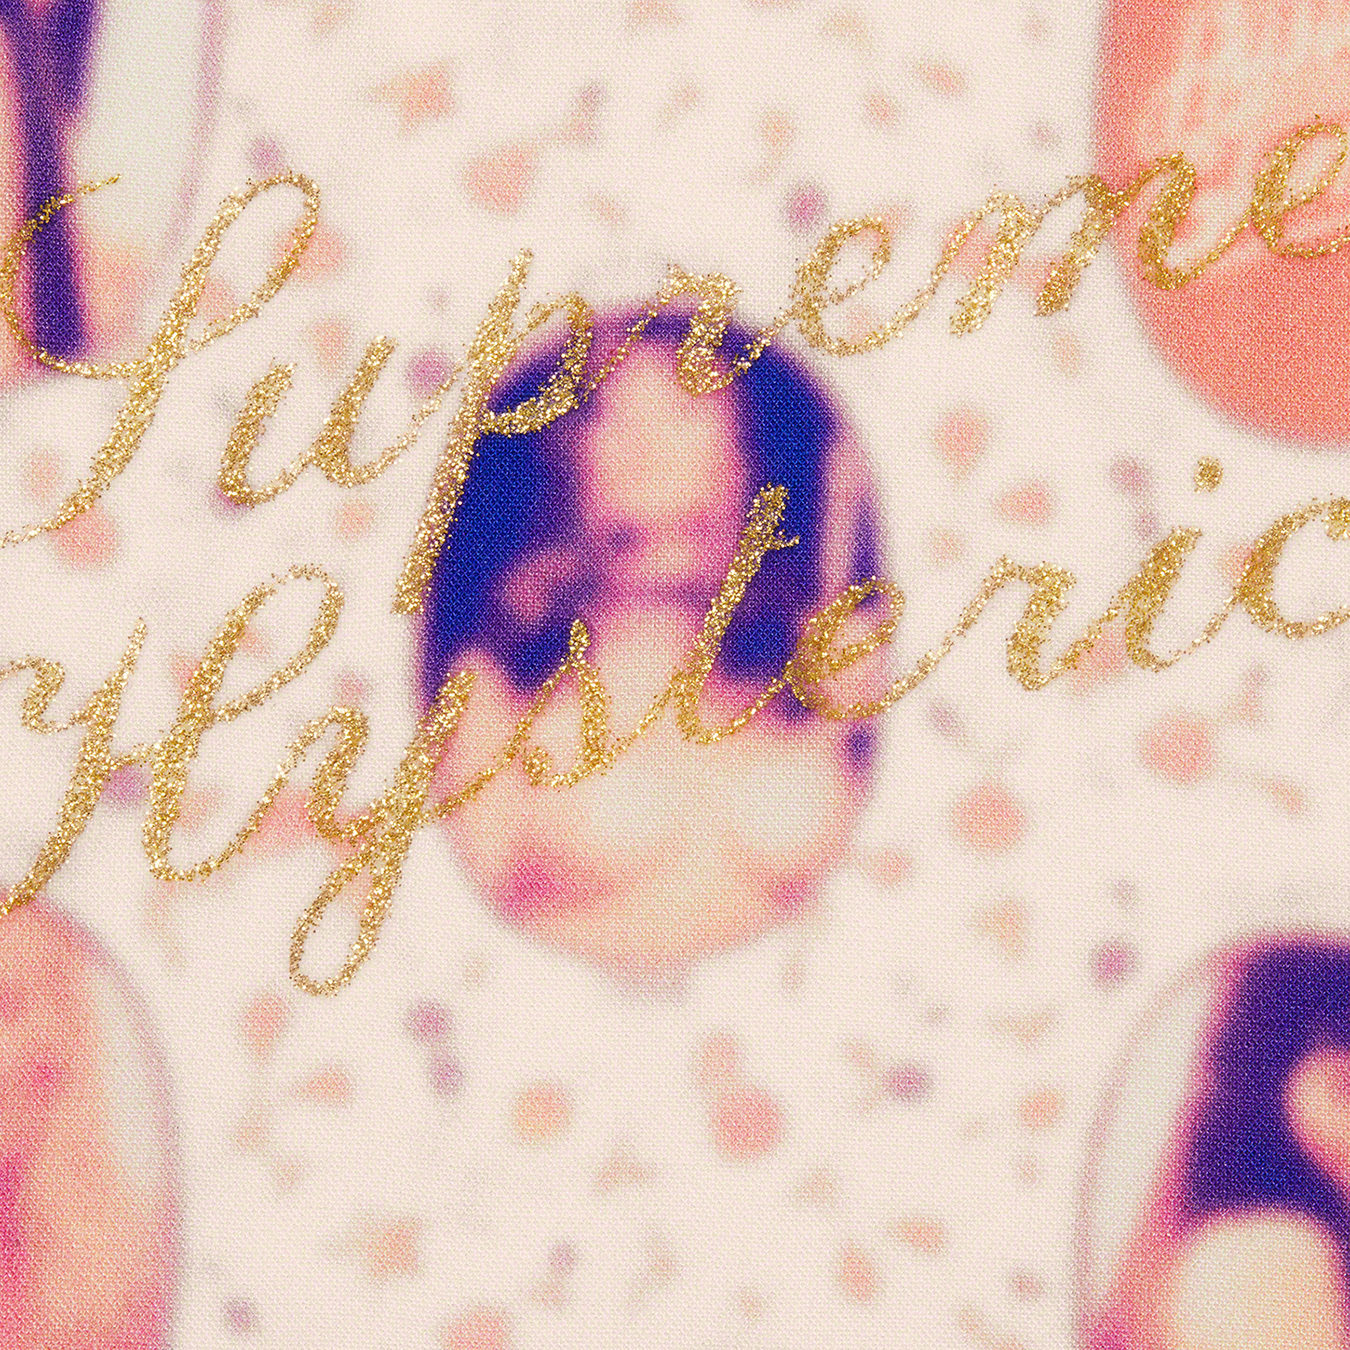 Supreme®/HYSTERIC GLAMOUR Blurred Girls Rayon S/S Shirt - Supreme 